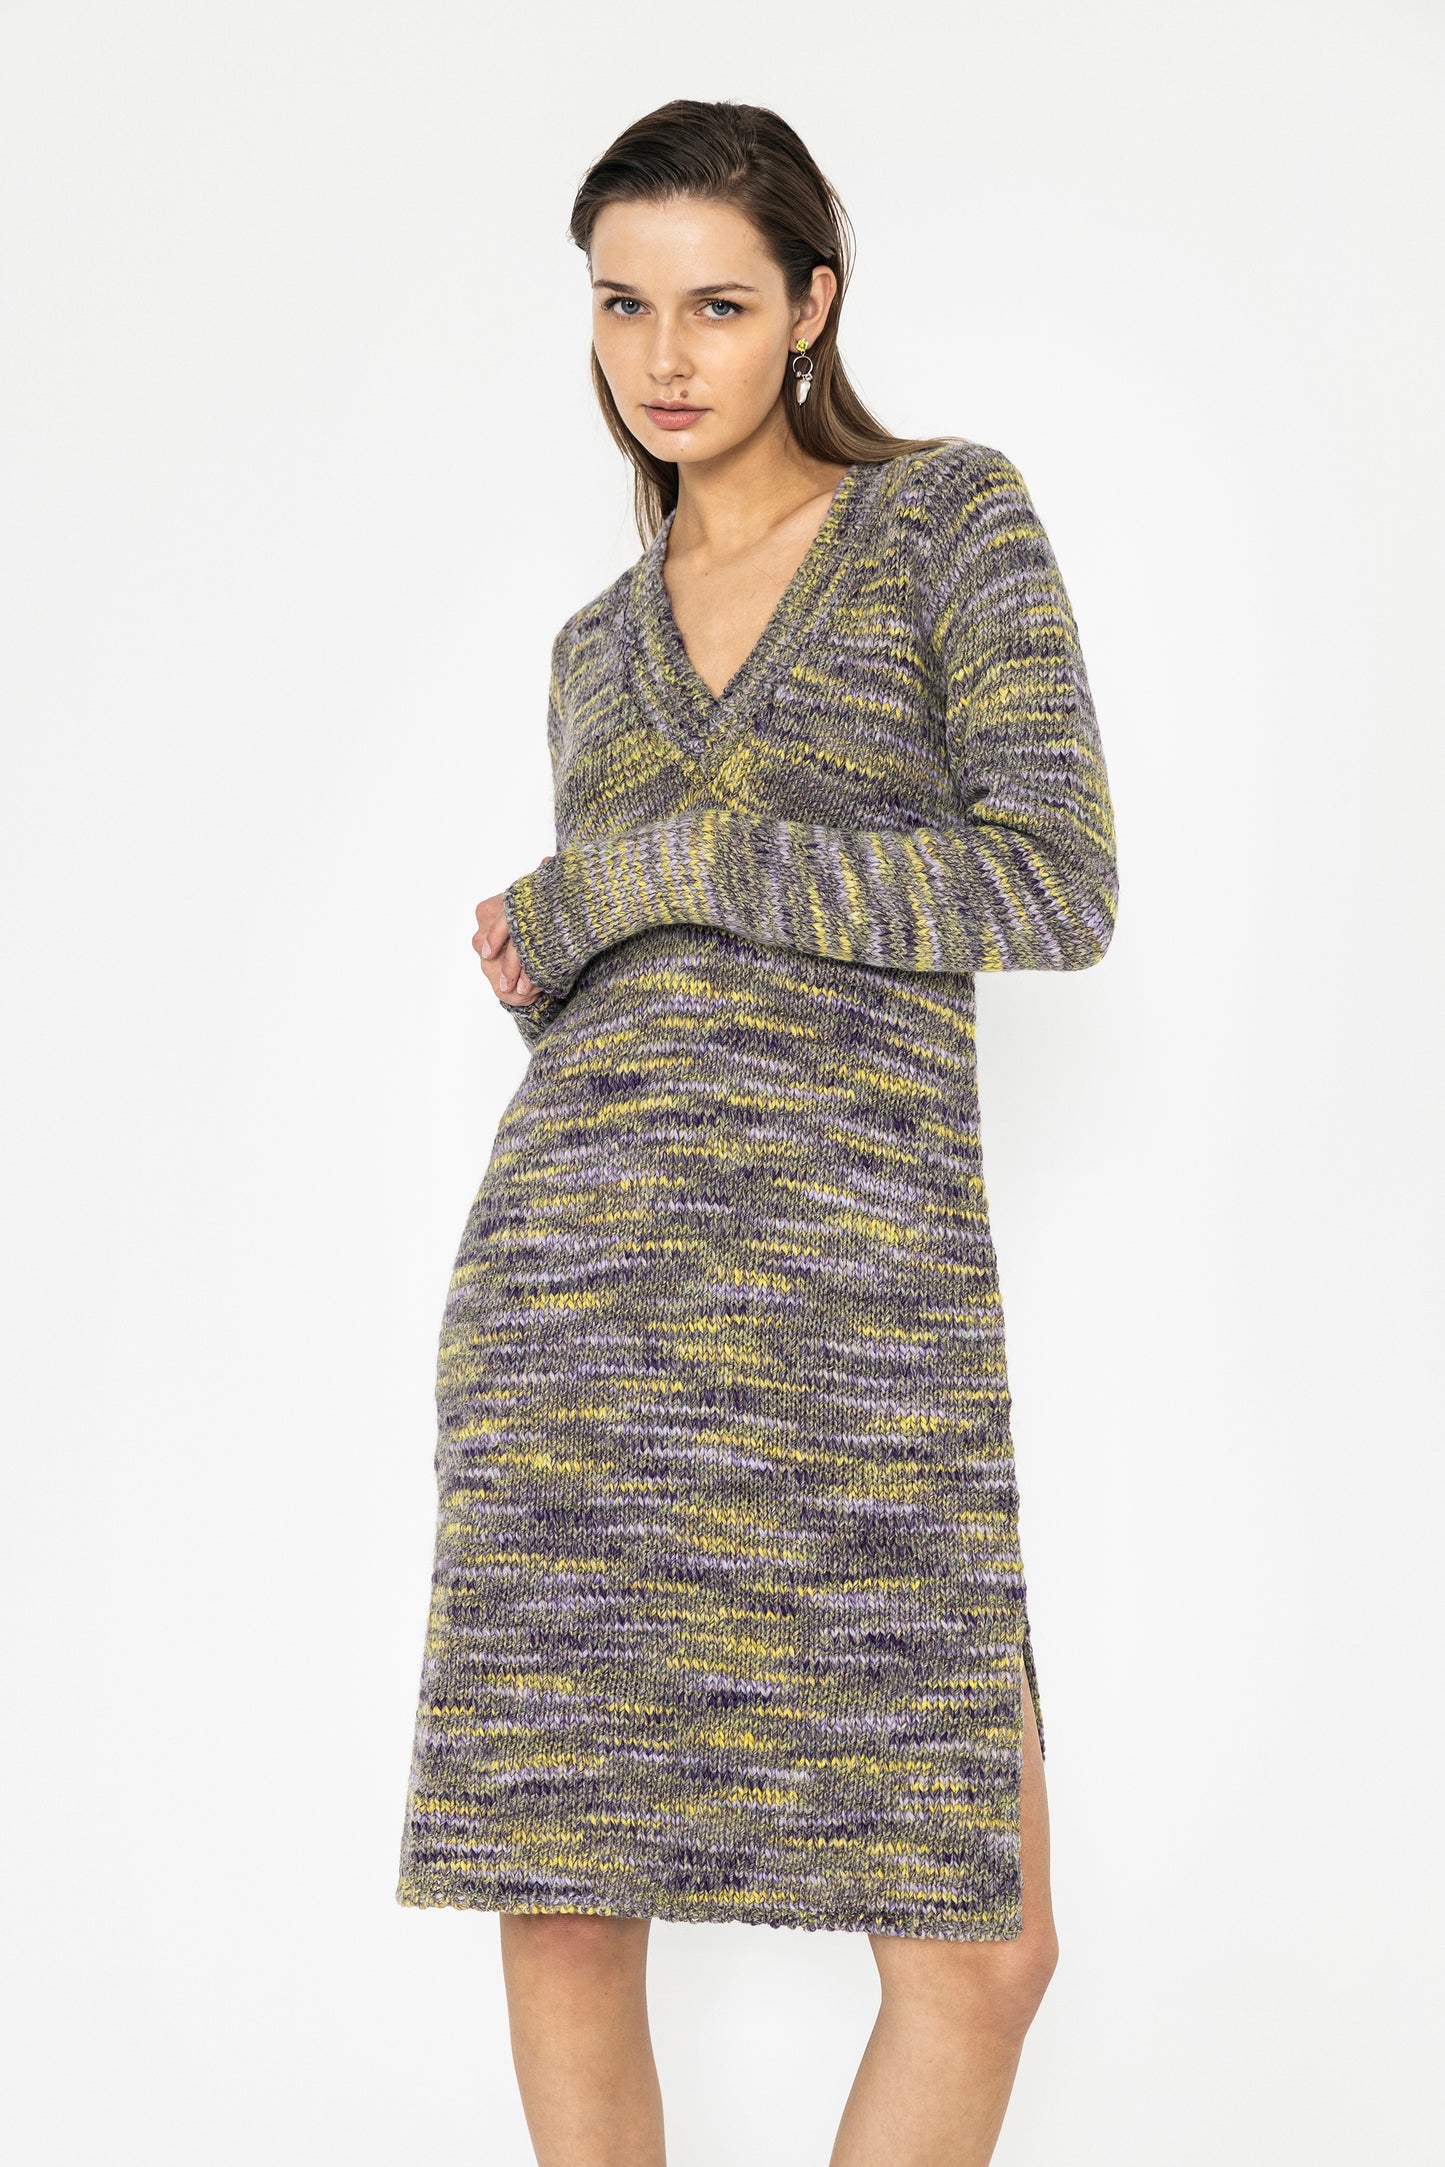 Chunky knit dress in Moss